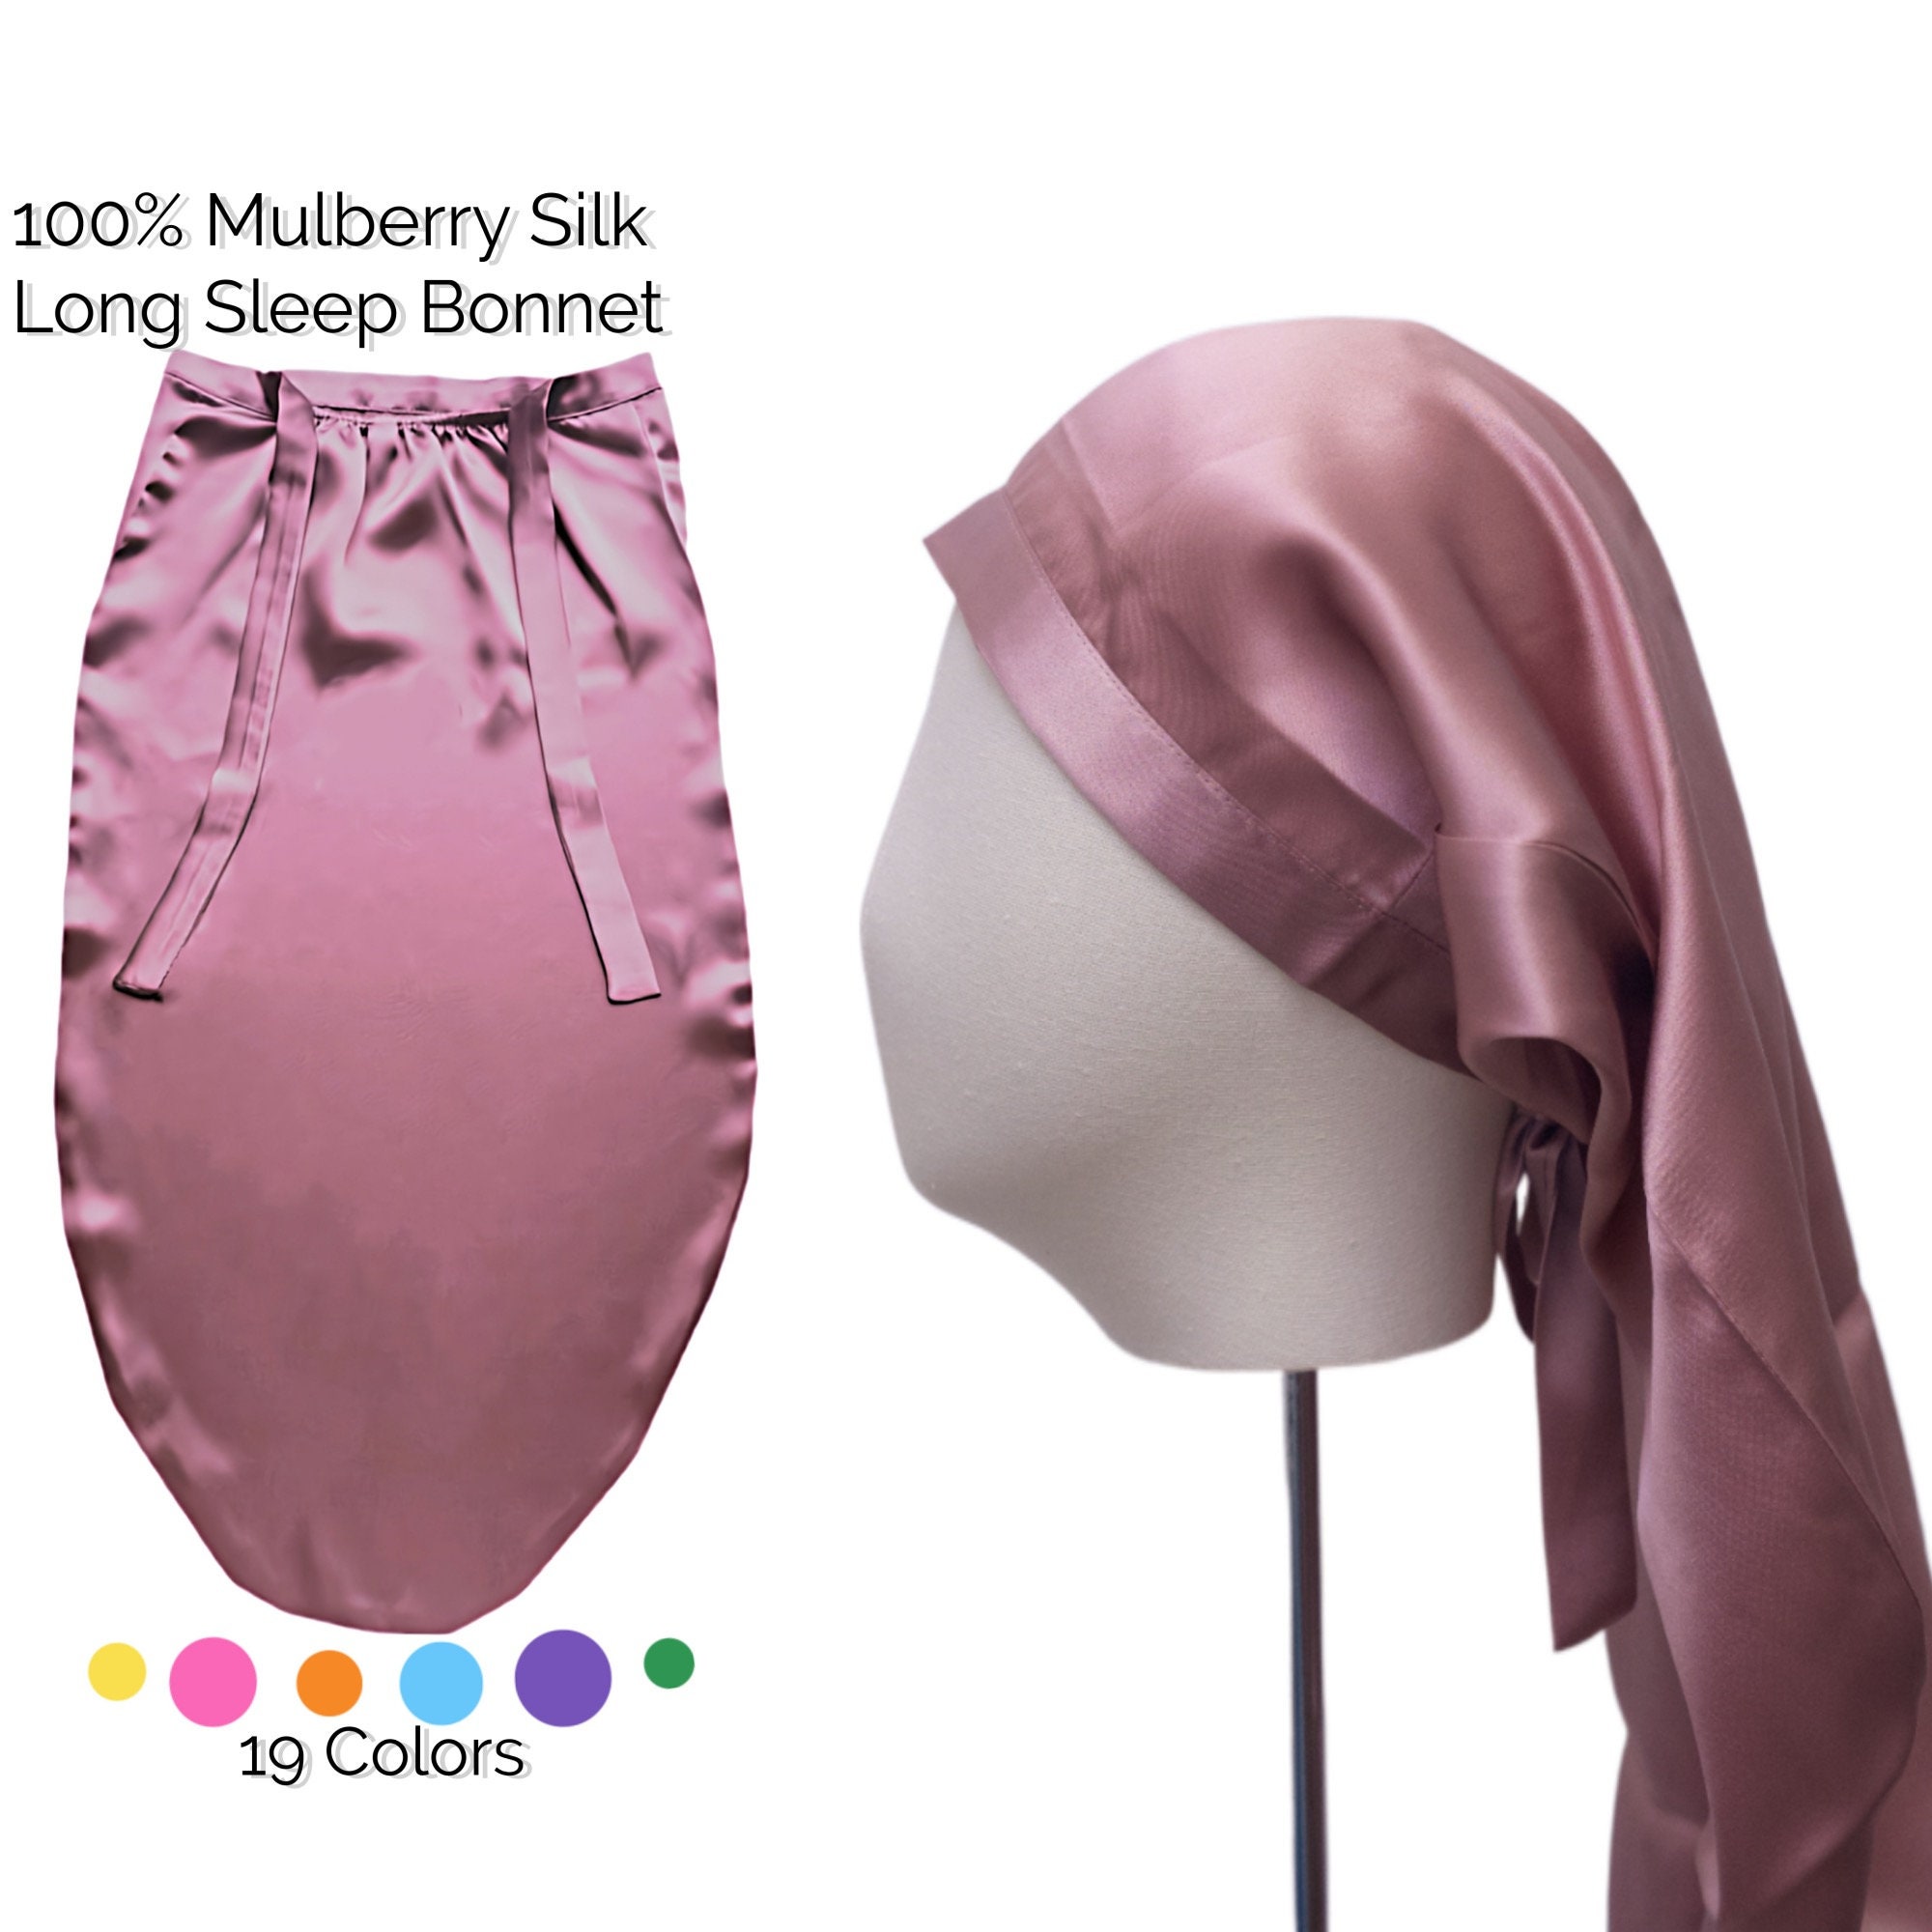 SAYMRE Long Silk Bonnet-100% Mulberry Silk Sleep Cap Elastic Band